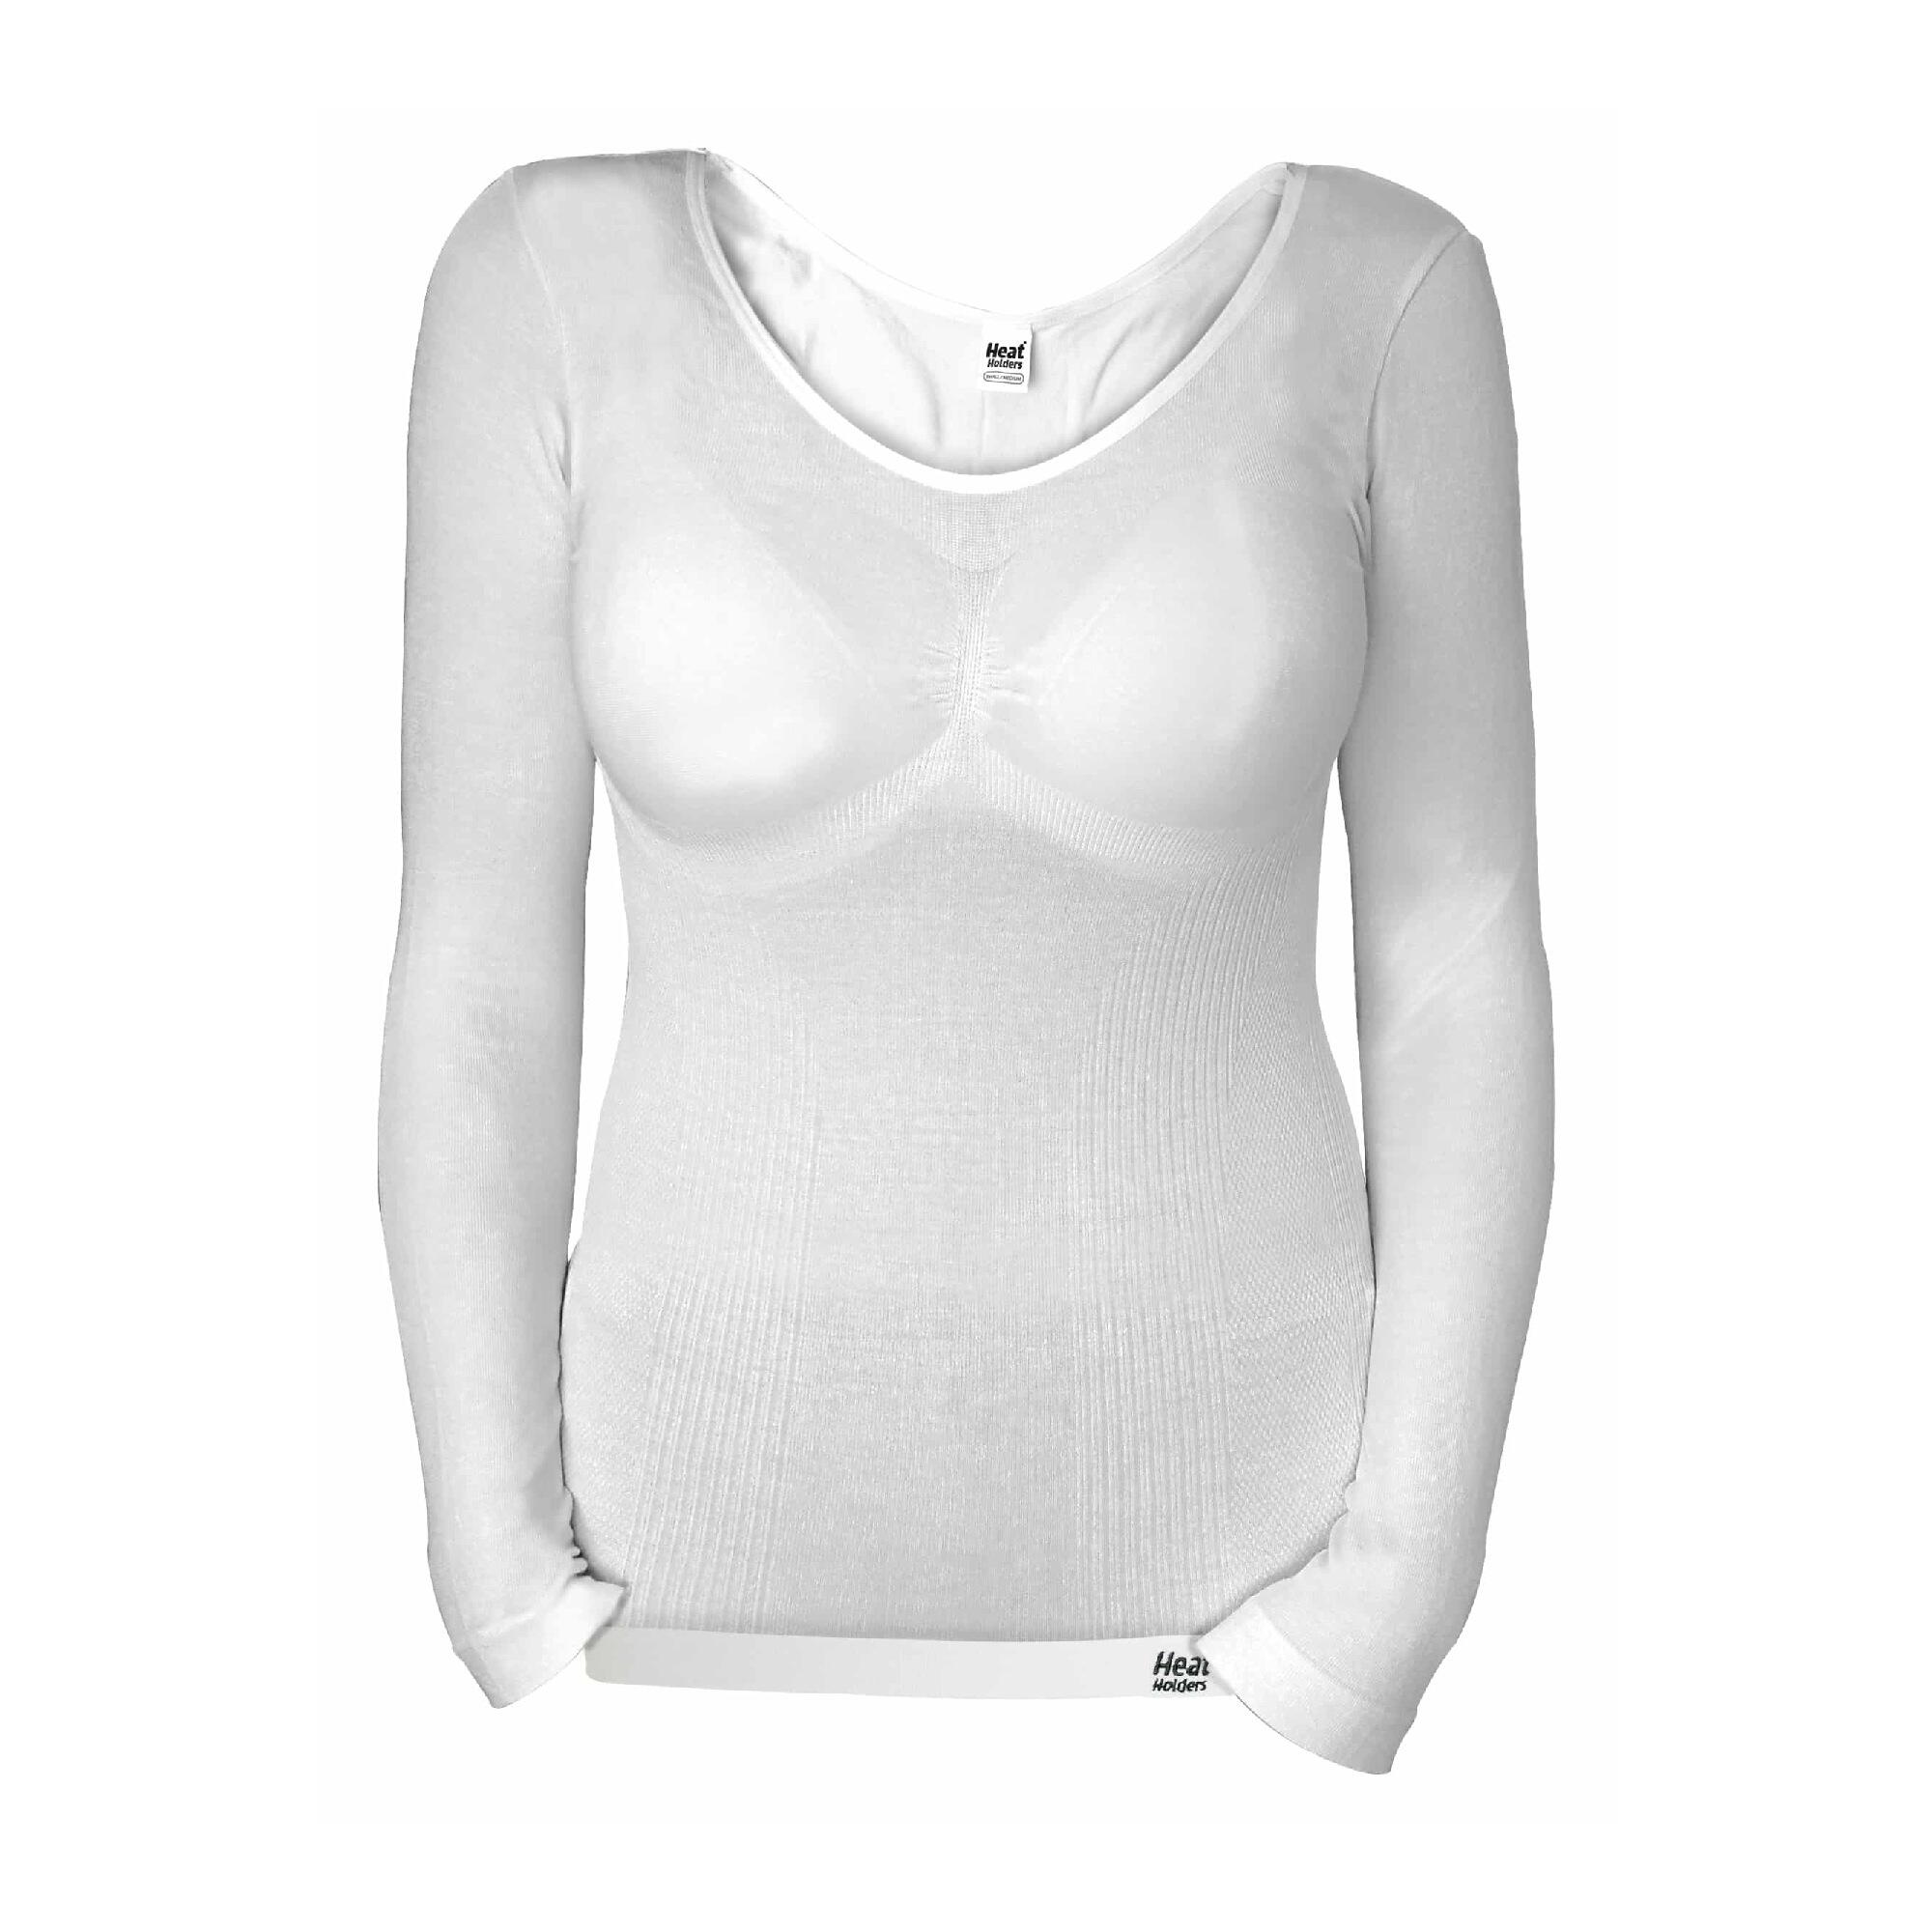 Ladies Cotton Winter Thermal Underwear Long Sleeve Top Vest 1/4